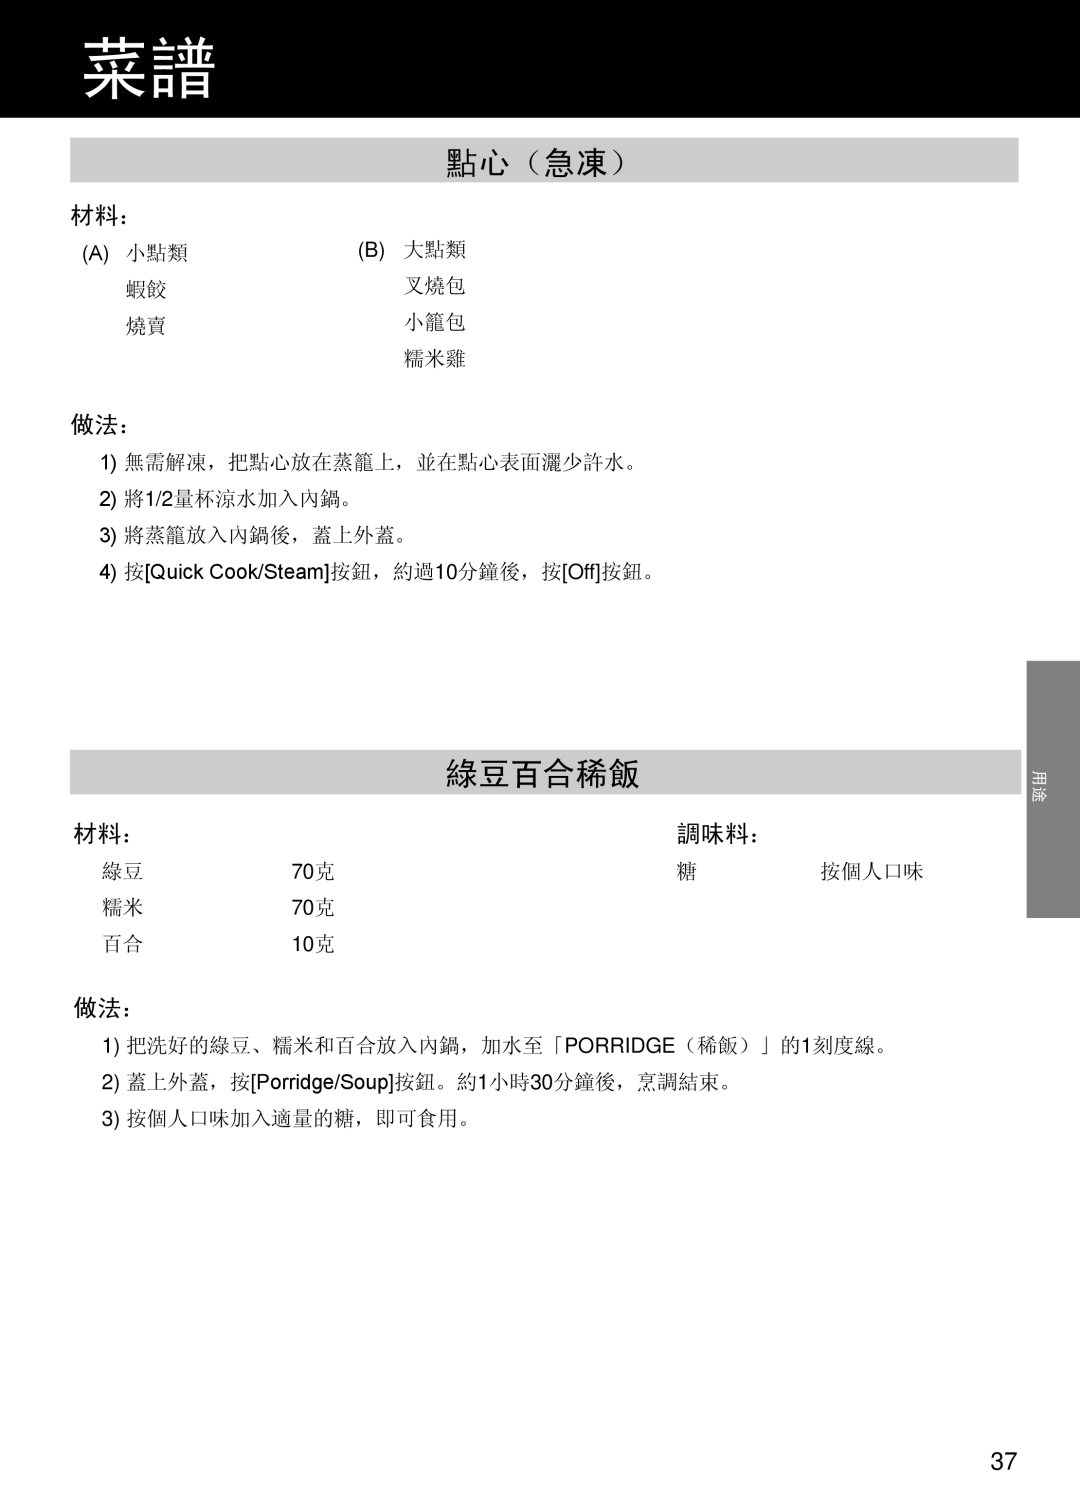 Panasonic SR/DF181 specifications 點心（急凍）, 綠豆百合稀飯, 調味料： 